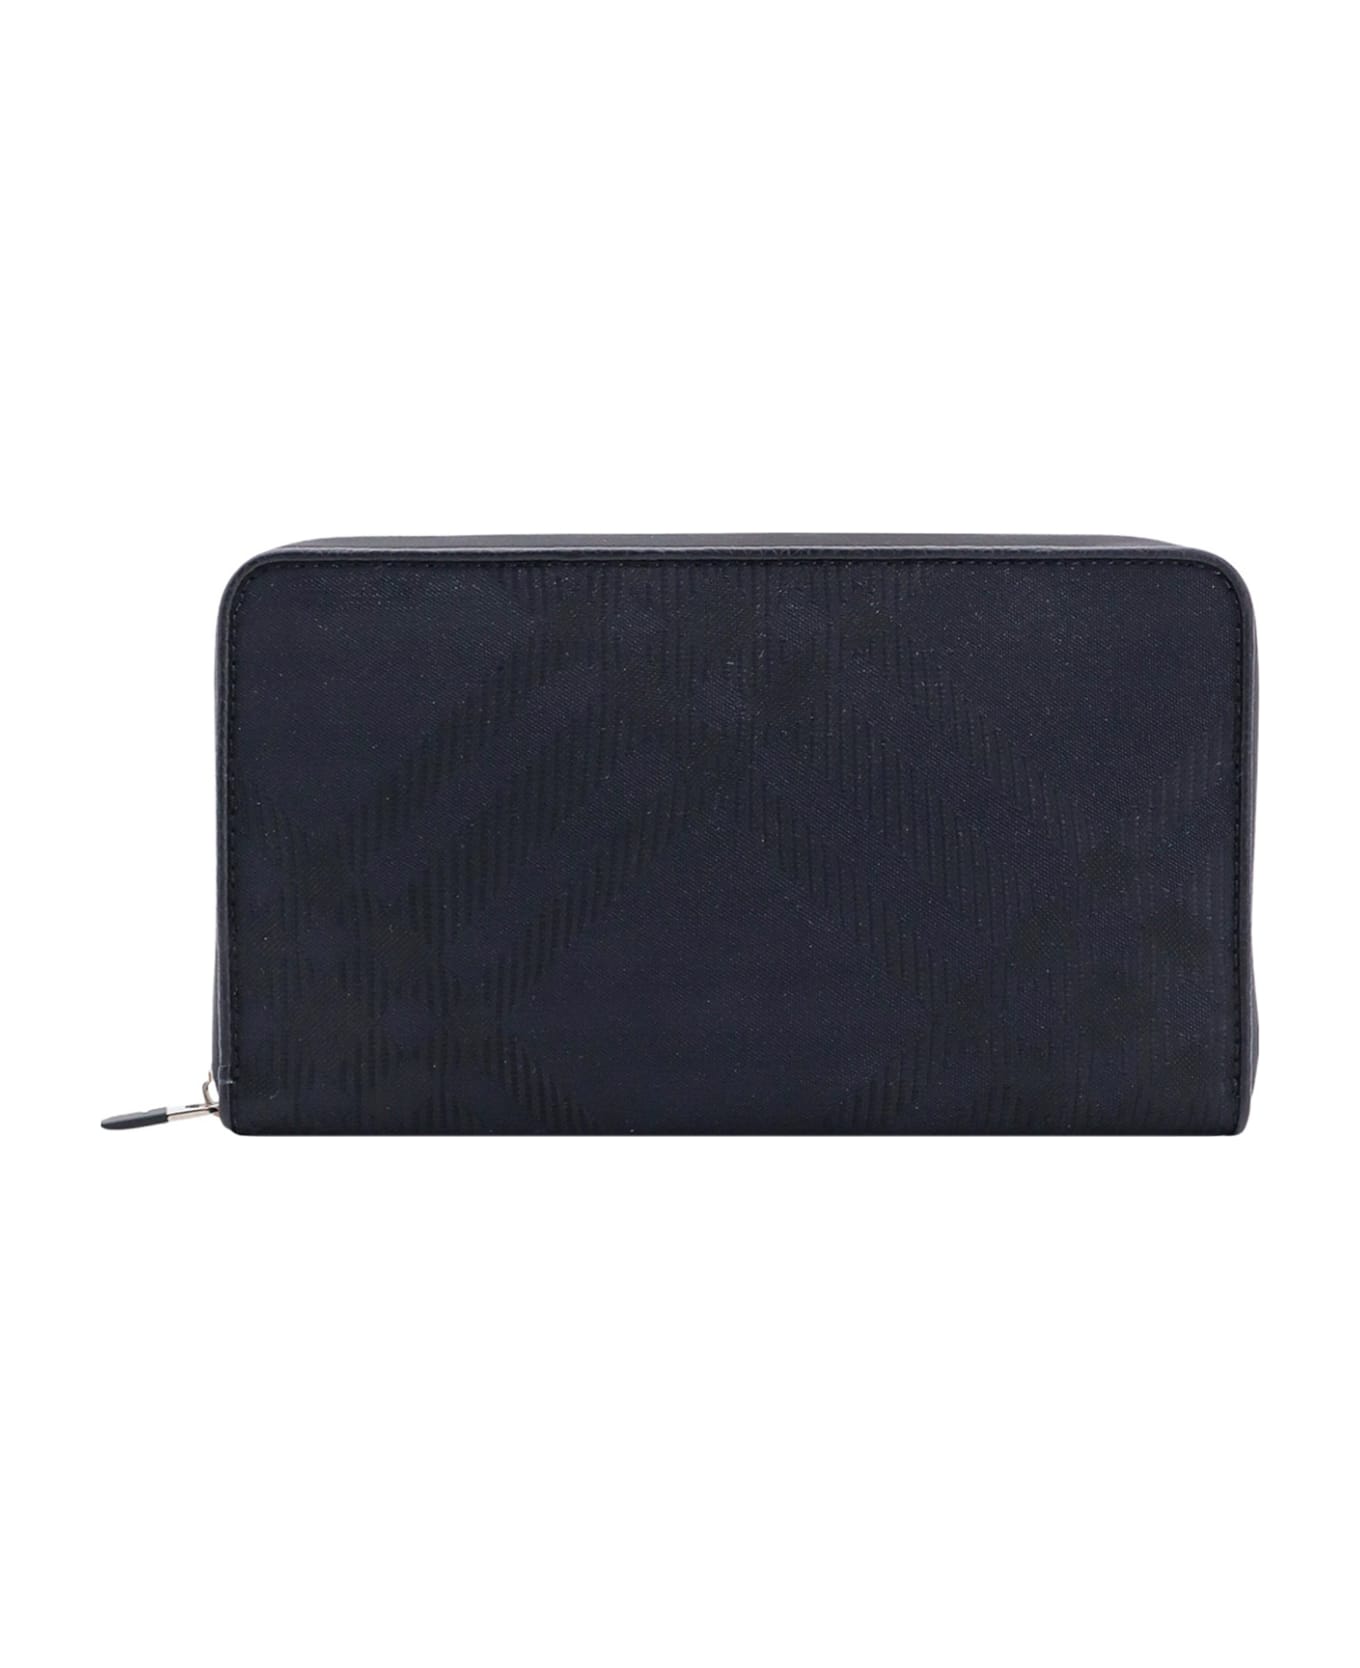 Burberry Wallet - Black 財布